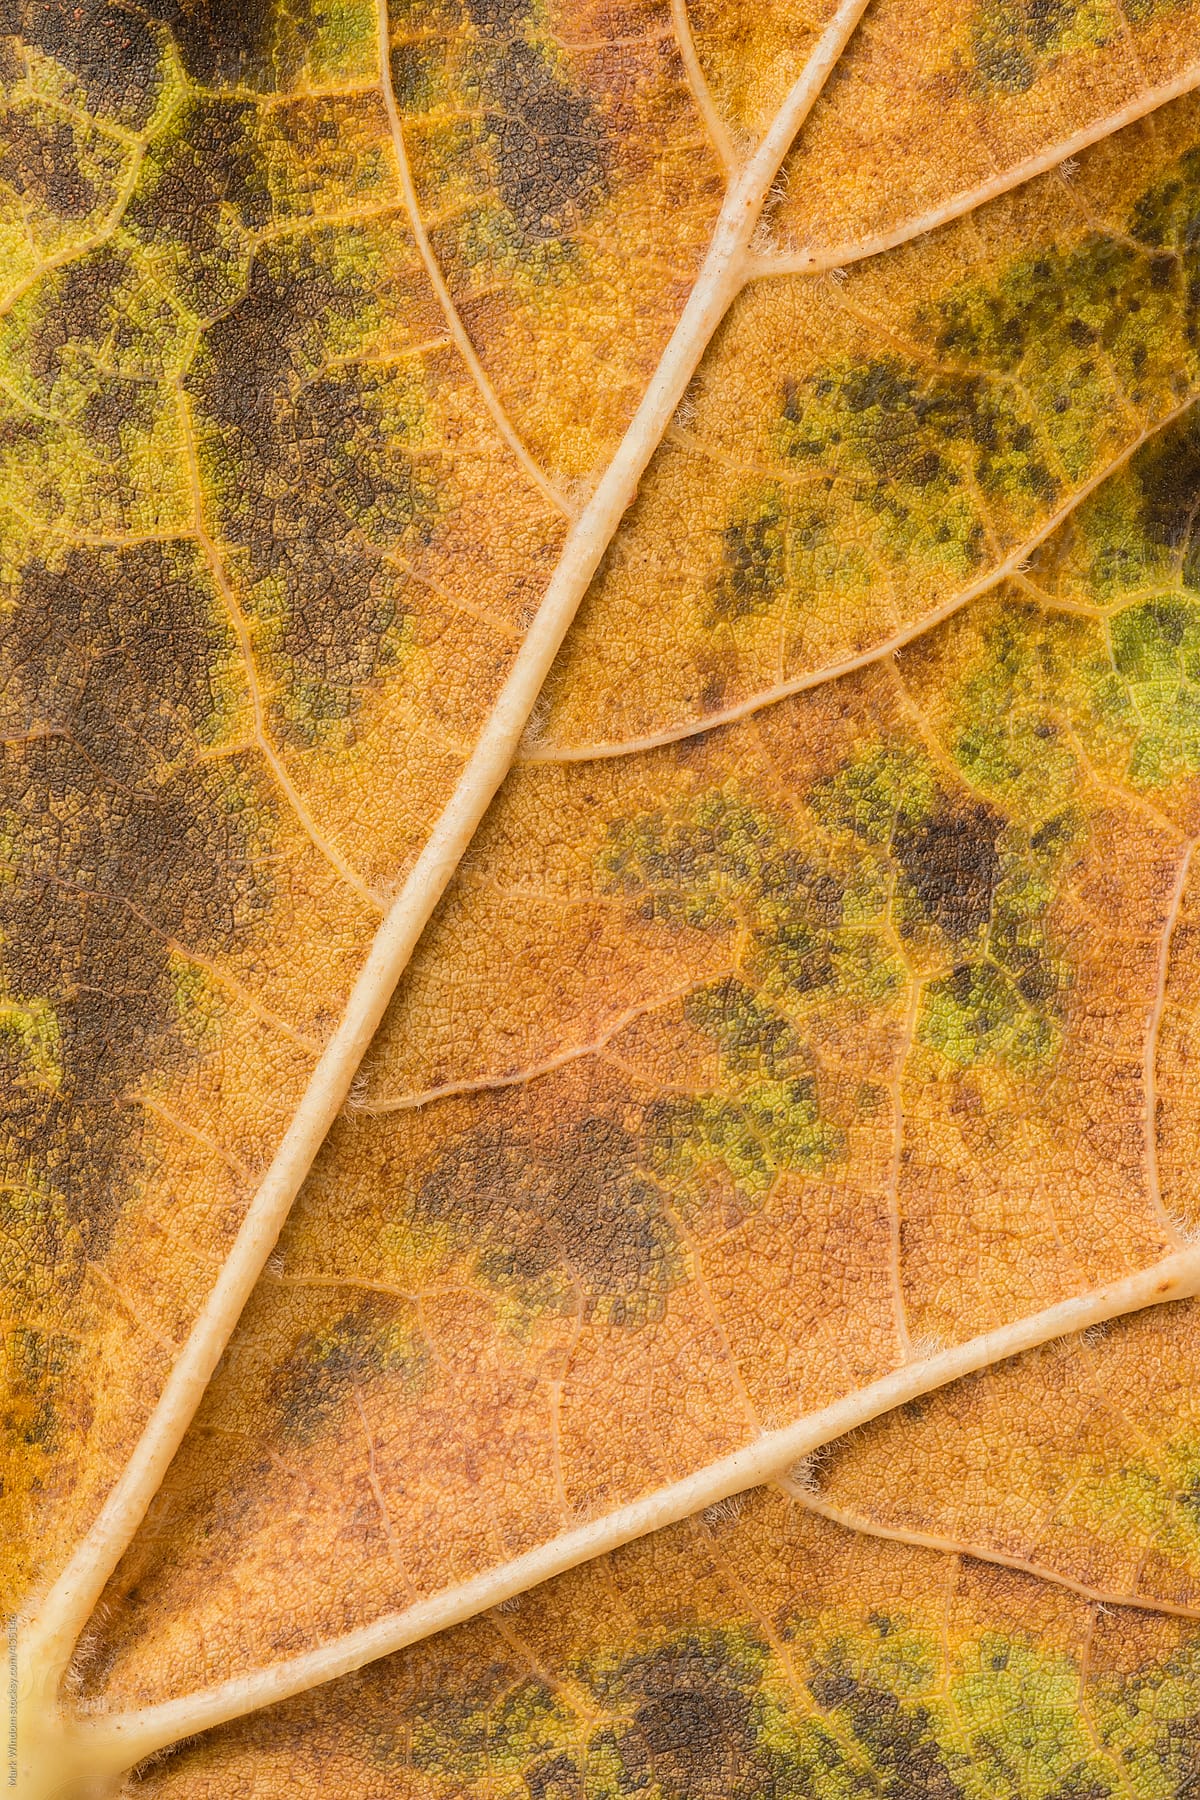 Maple leaf in Autumn, closeup